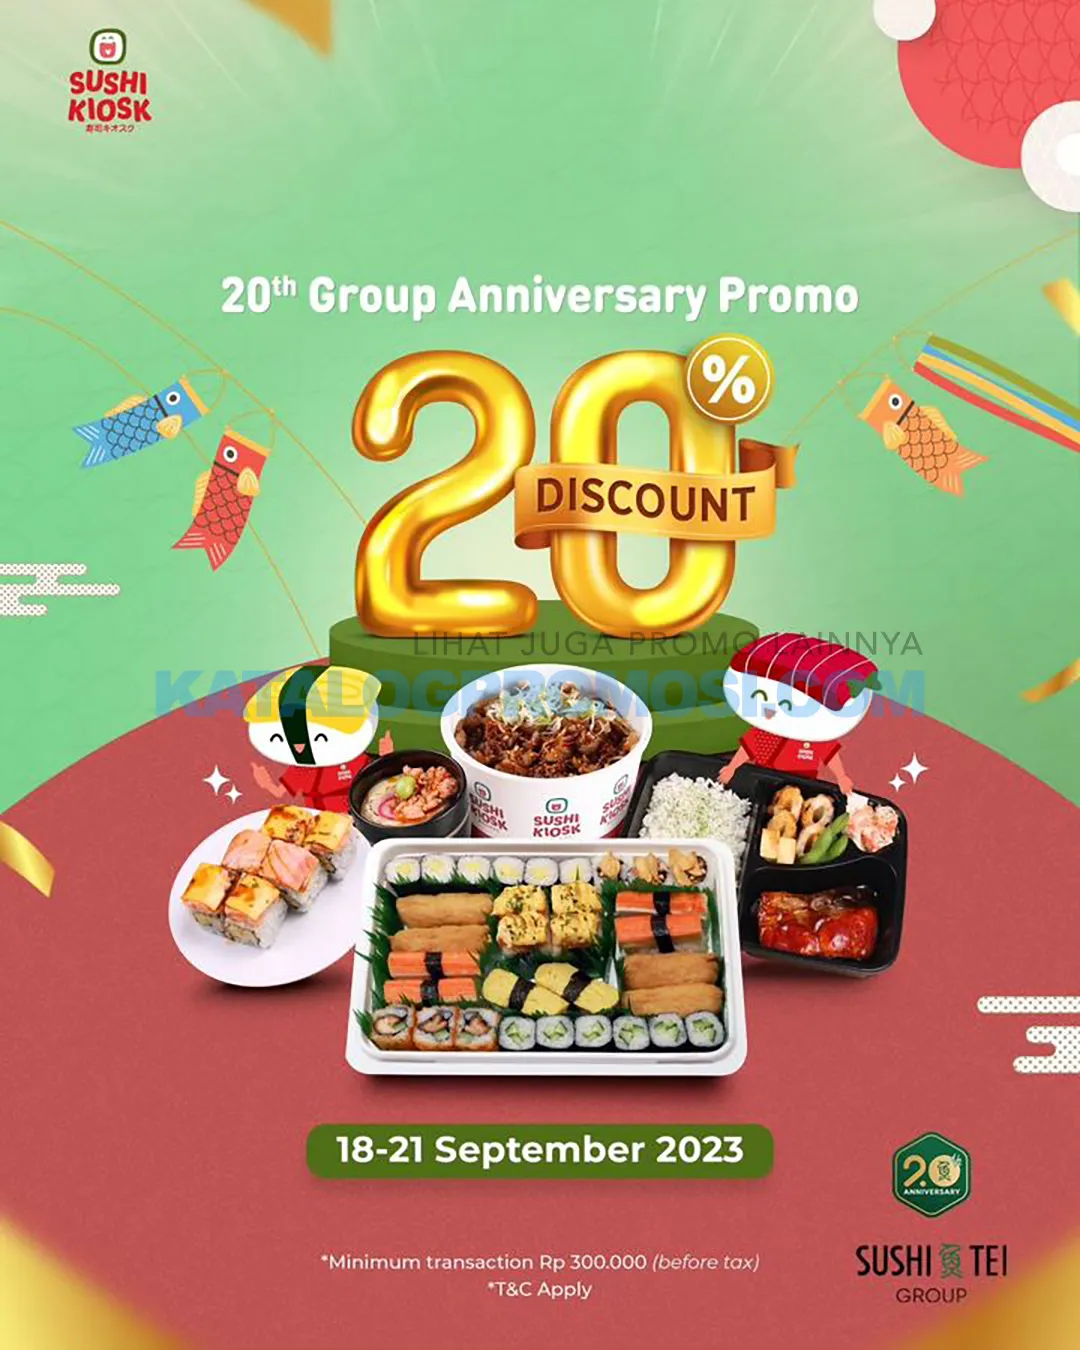 Promo Sushi Kiosk Anniversary Sushi Tei Group - Diskon 20%